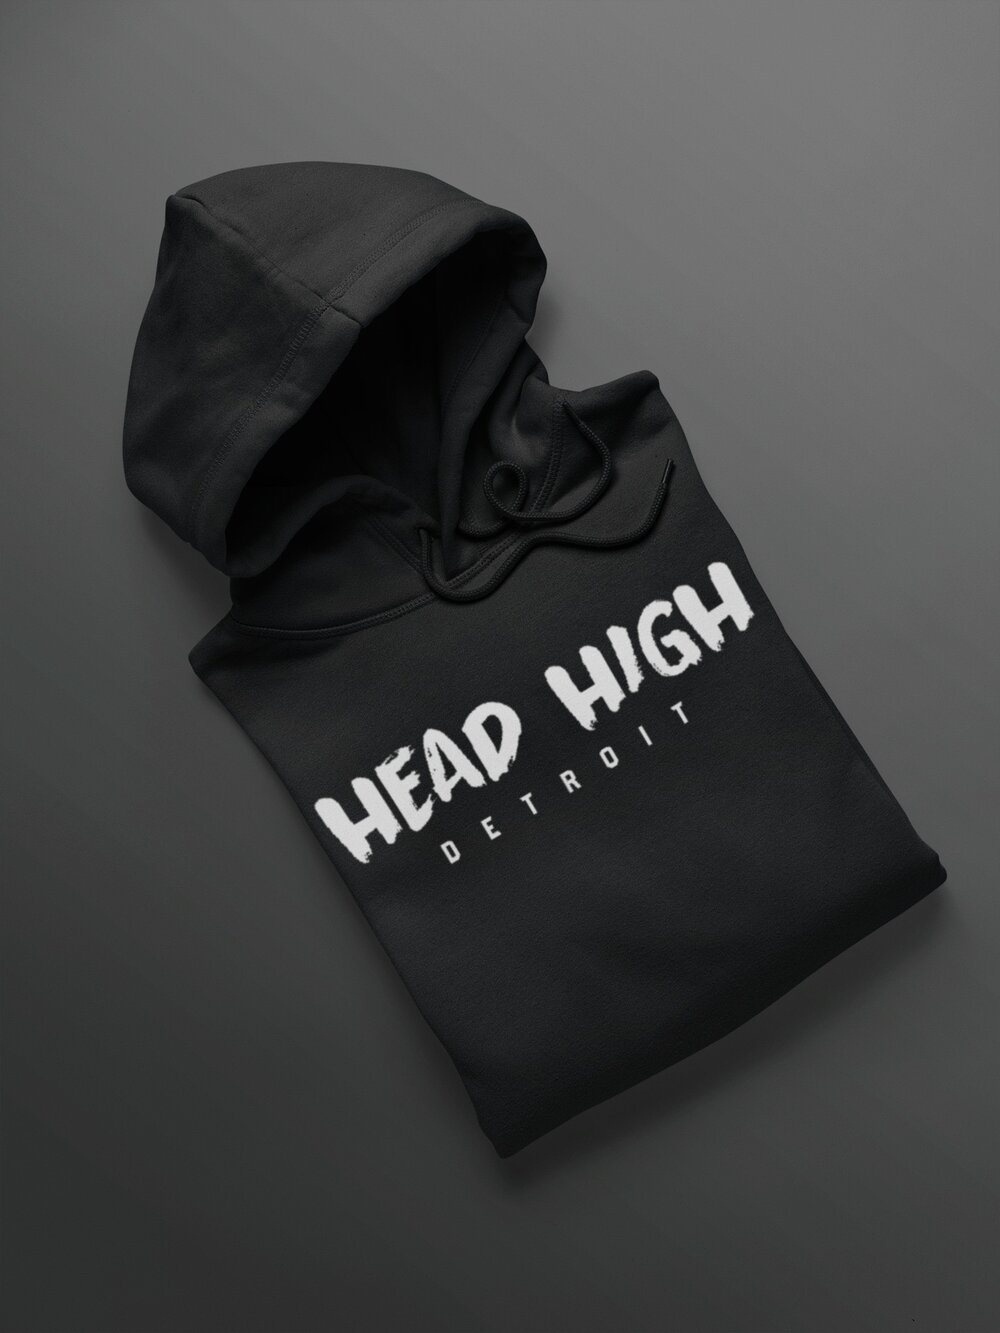 headhigh-jlf-blk-hoodie.jpg